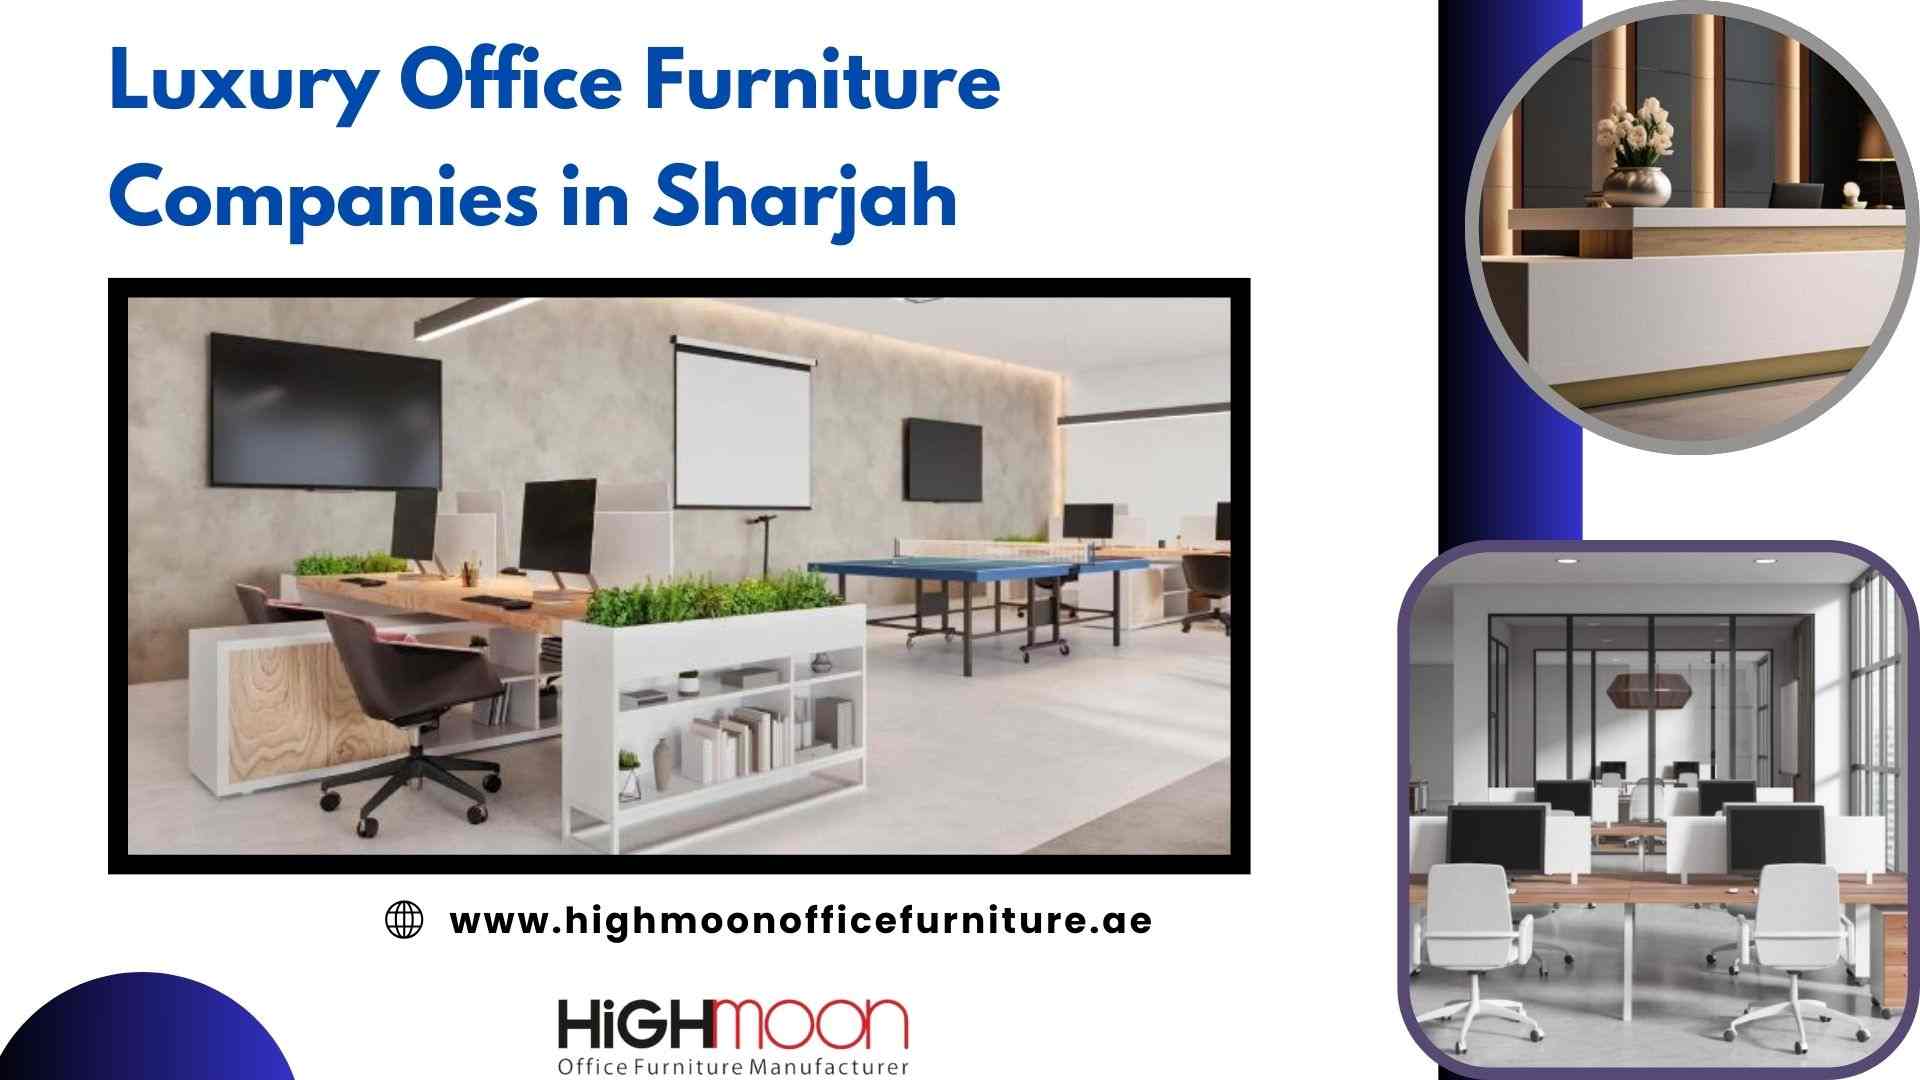 Luxury Office Furniture Companies in Sharjah